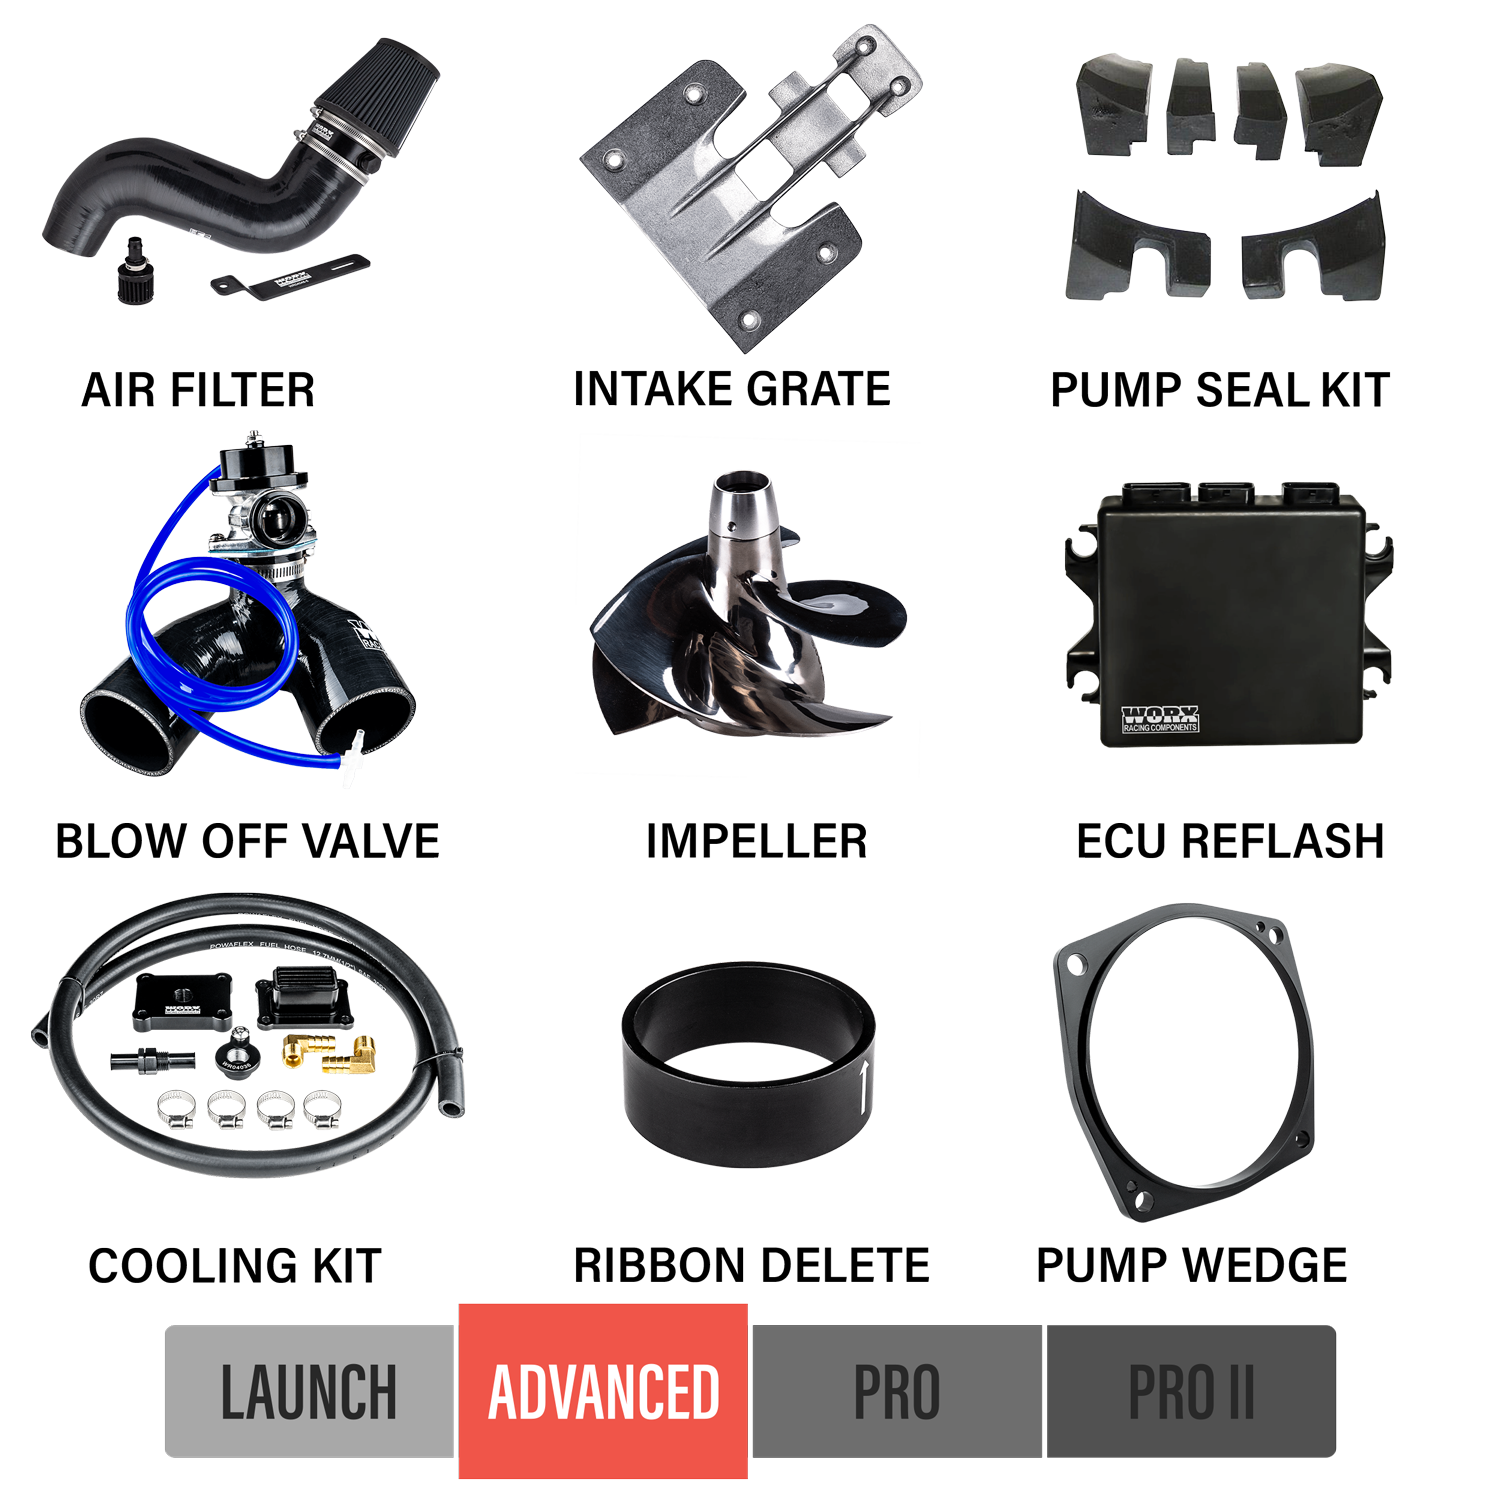 2012-2013 Yamaha FX SHO Upgrade Kits